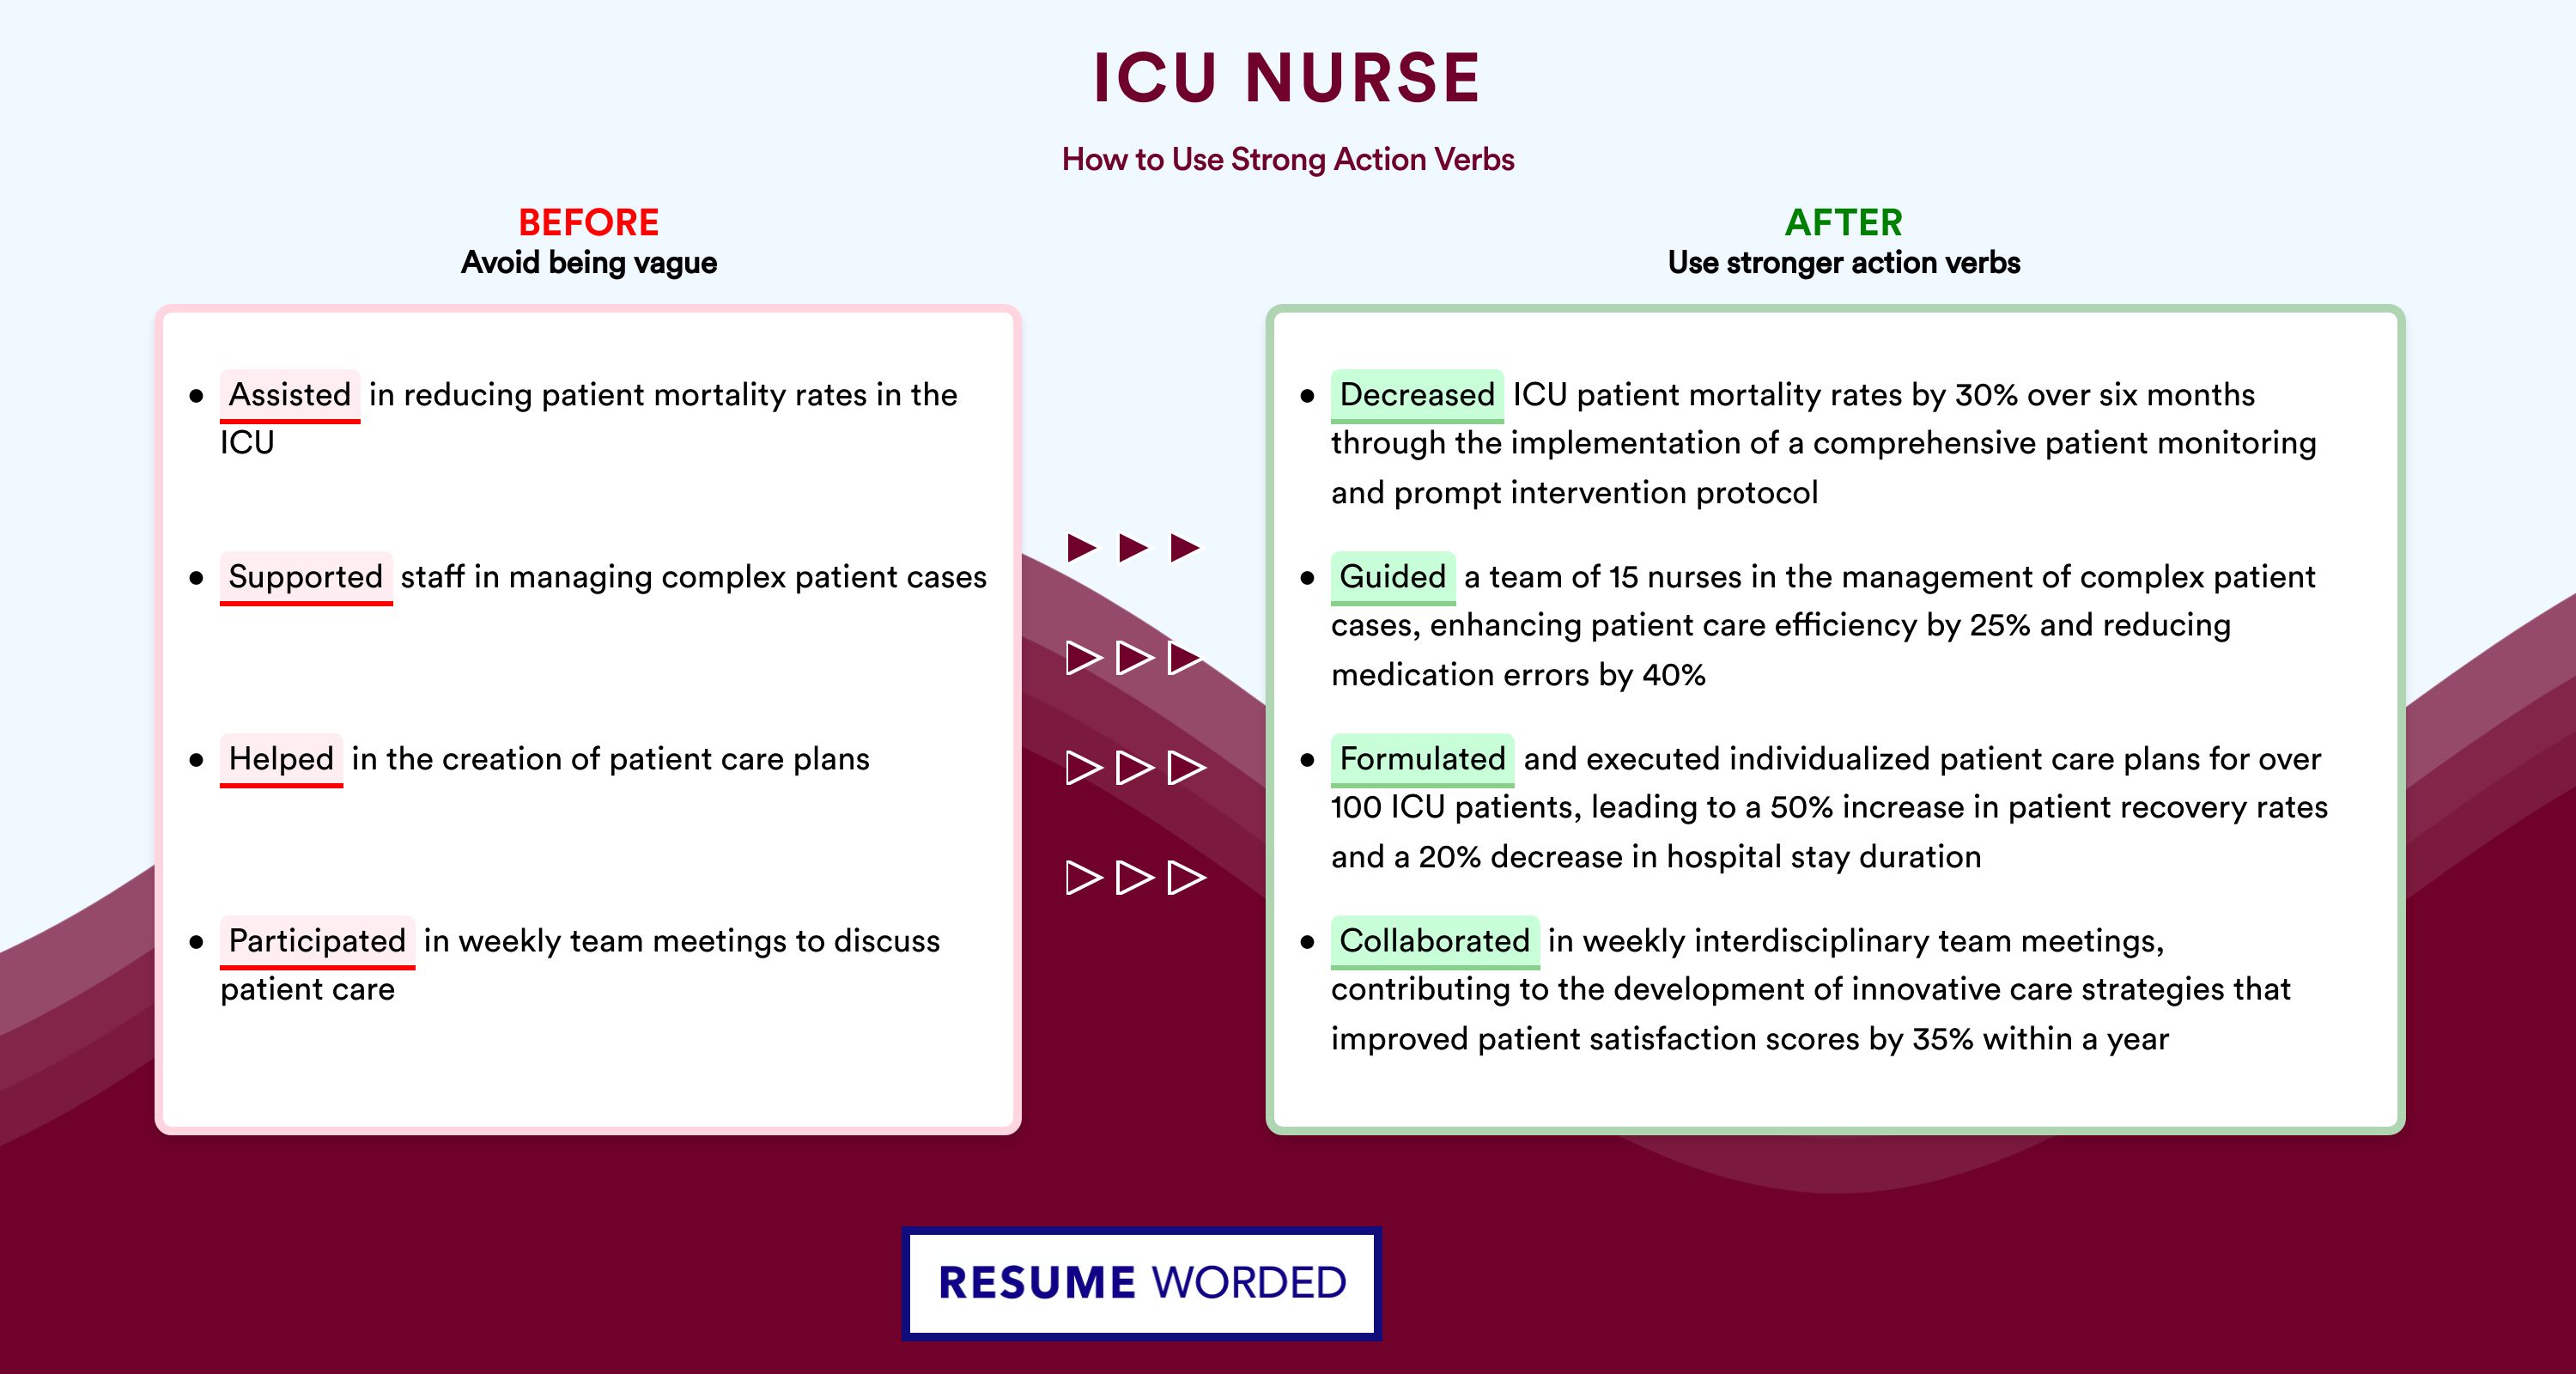 Action Verbs for ICU Nurse